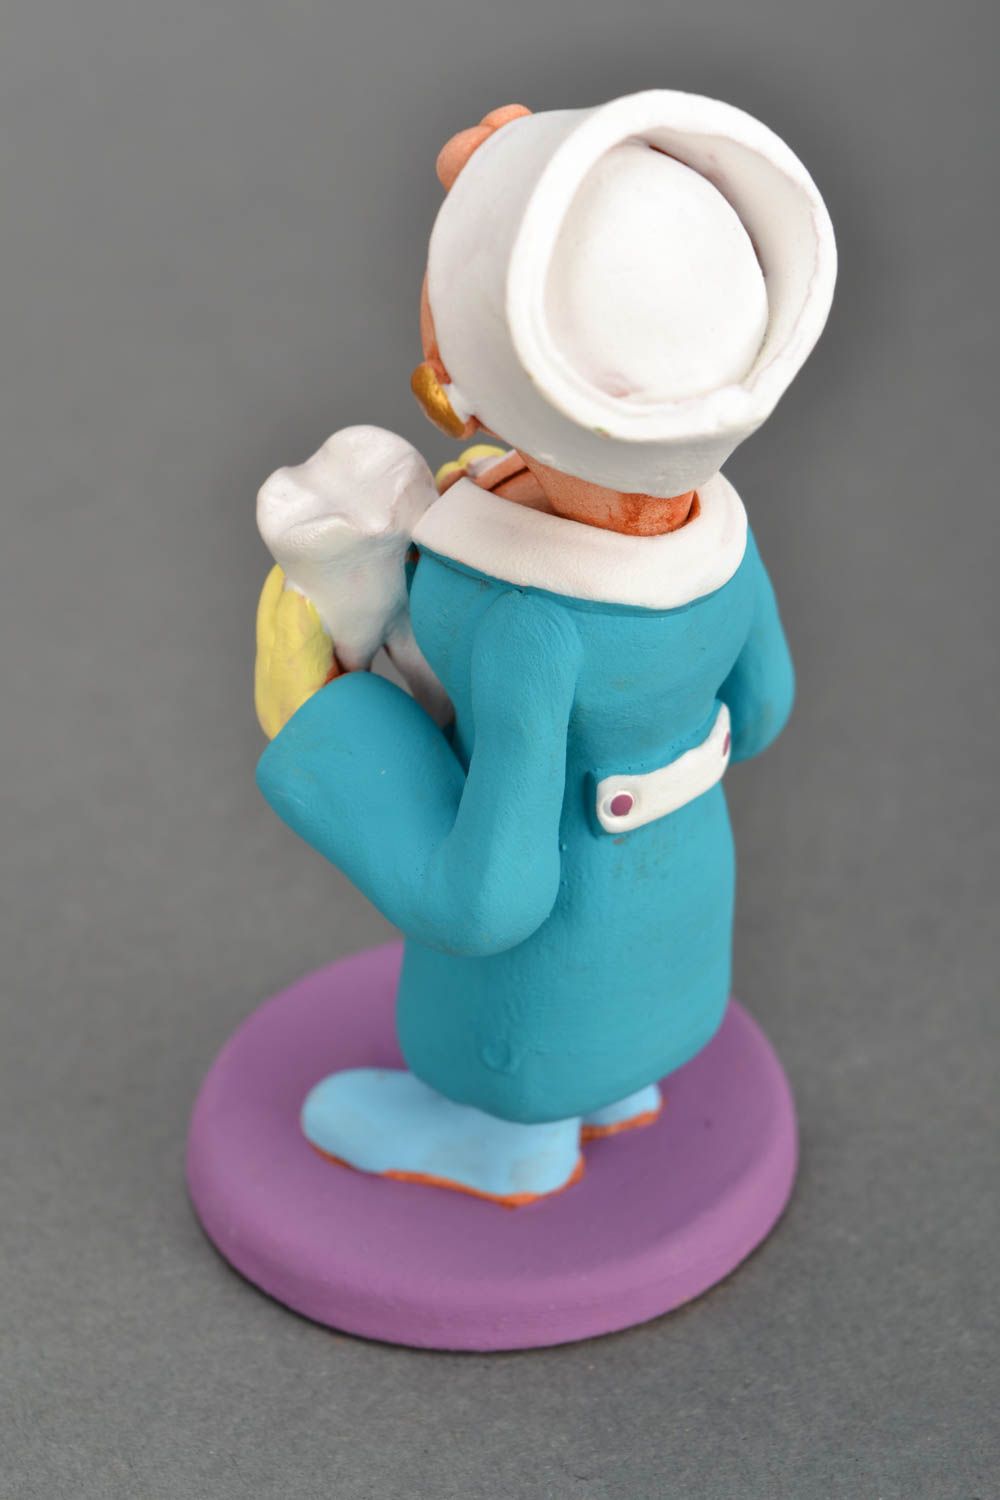 Statuina in ceramica fatta a mano figurina divertente souvenir di argilla foto 5